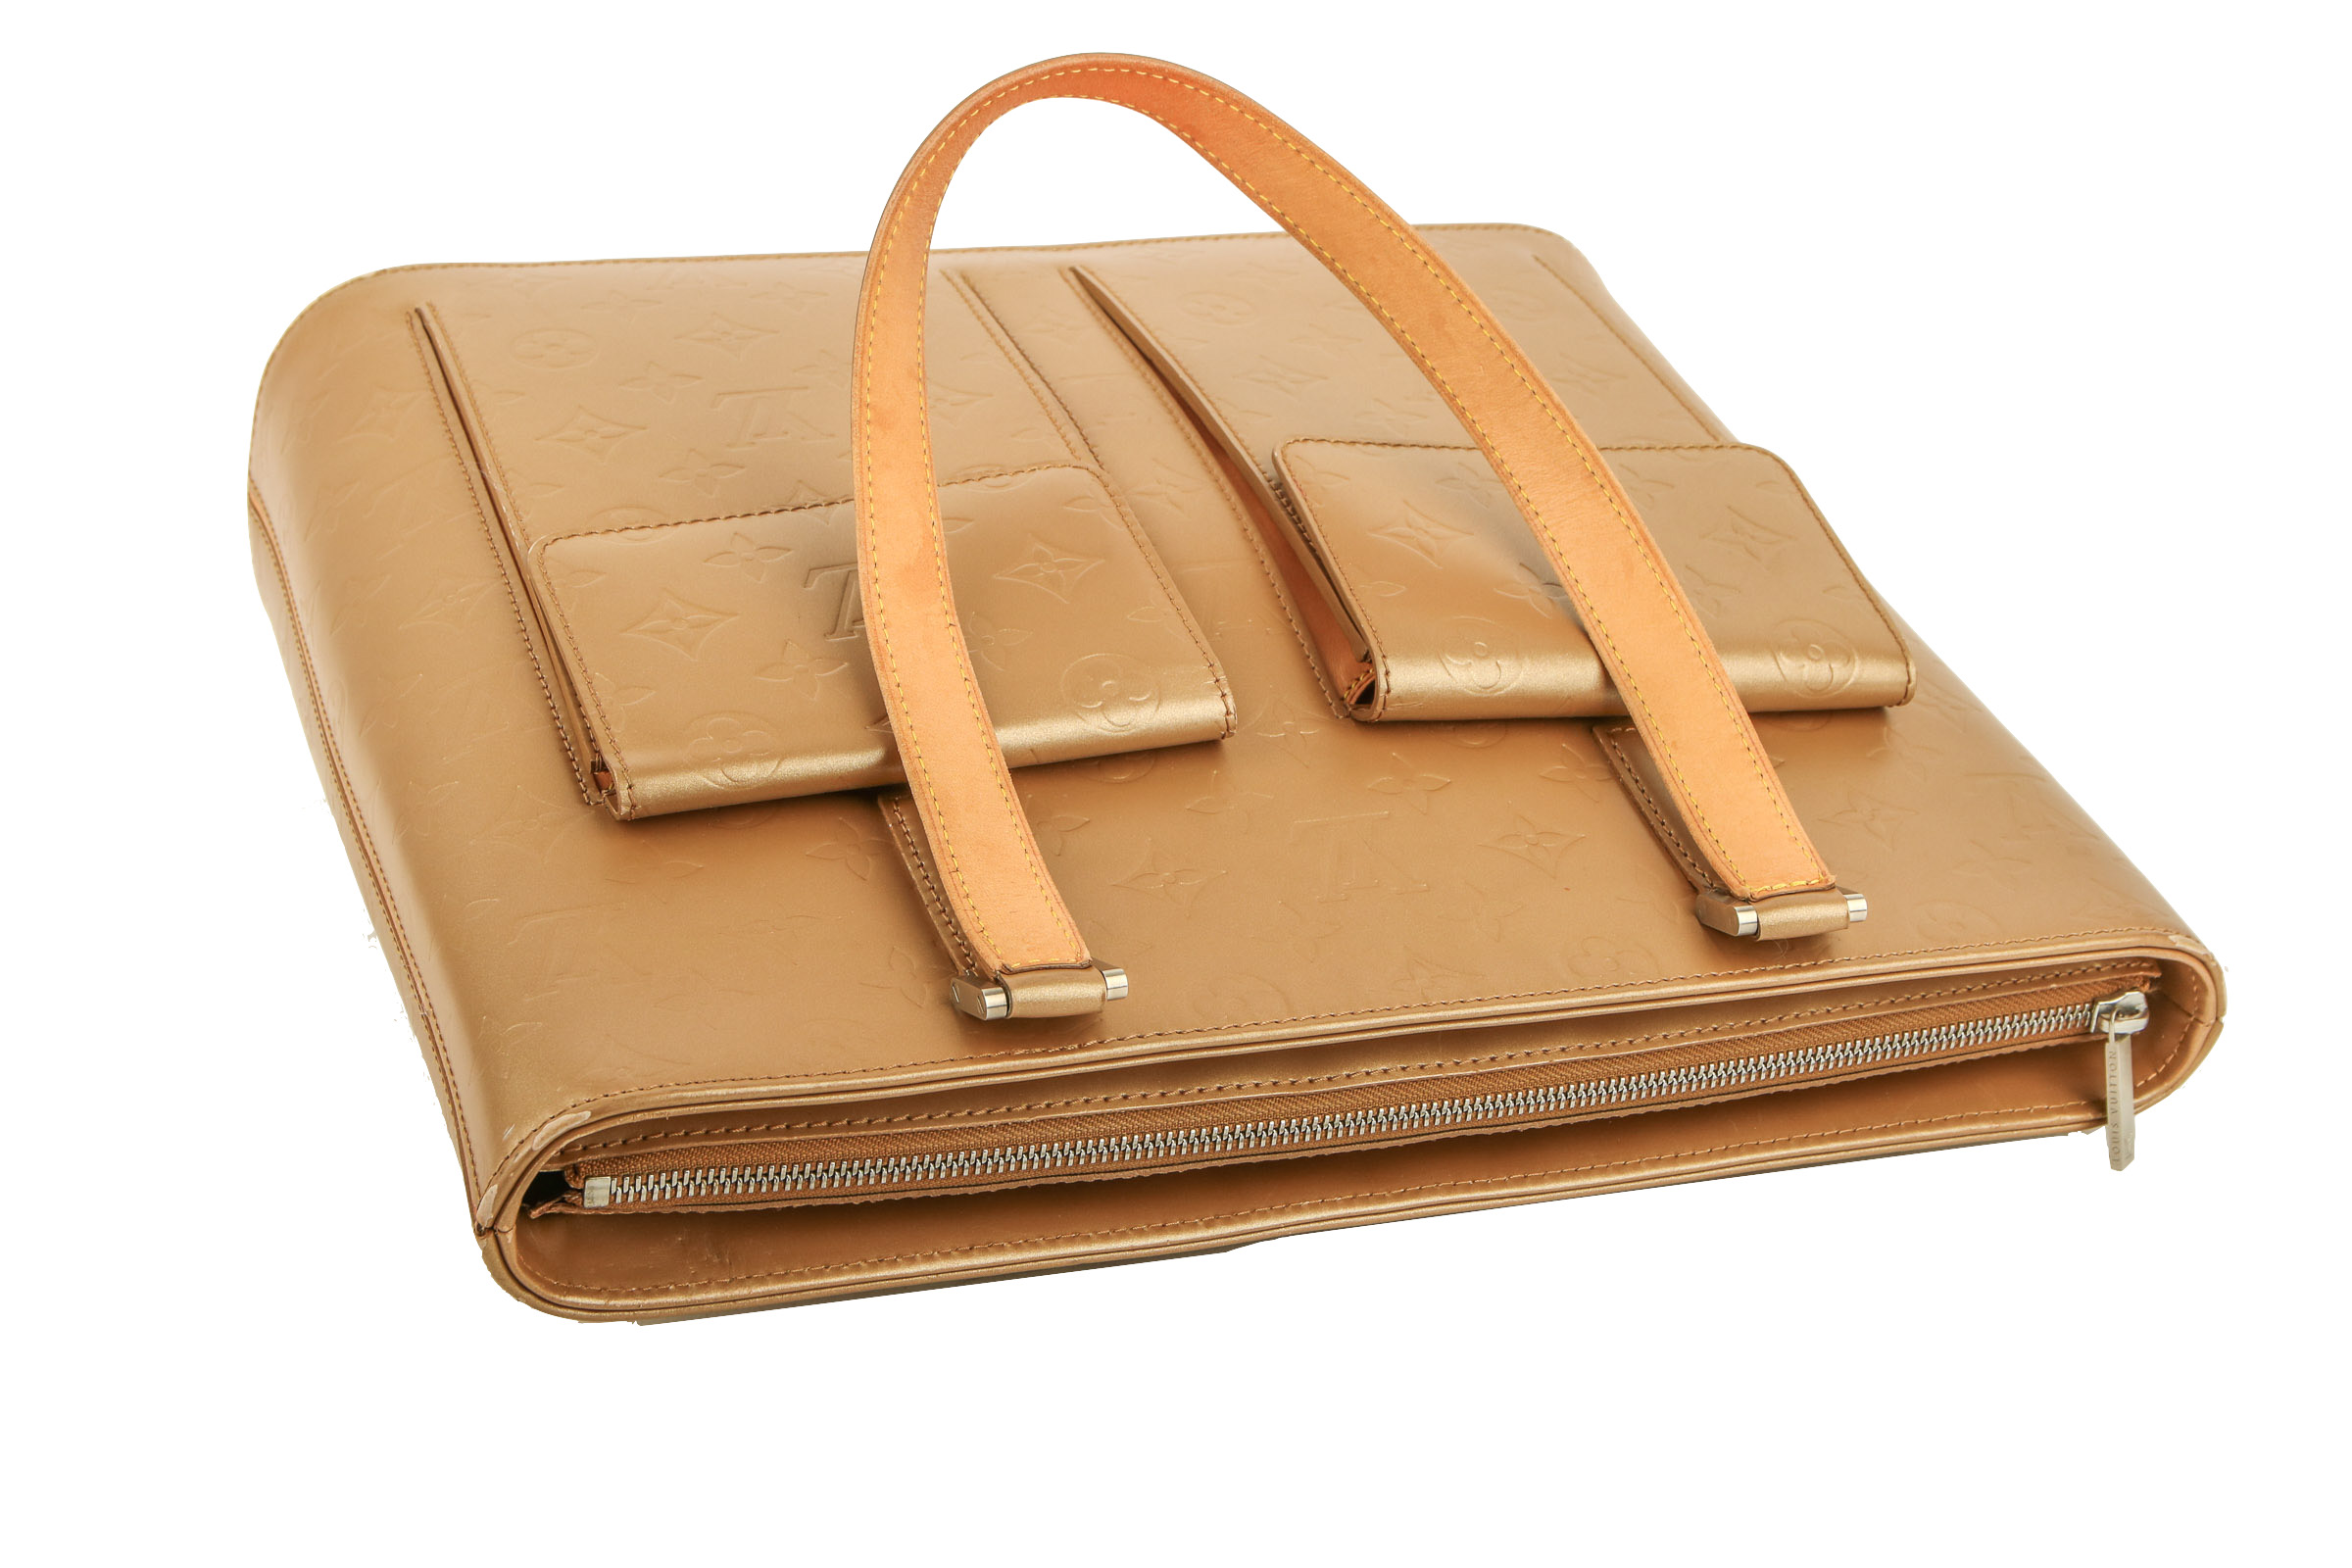 Louis Vuitton Wilwood M55102 Monogram Mat Leather Tote Handbag